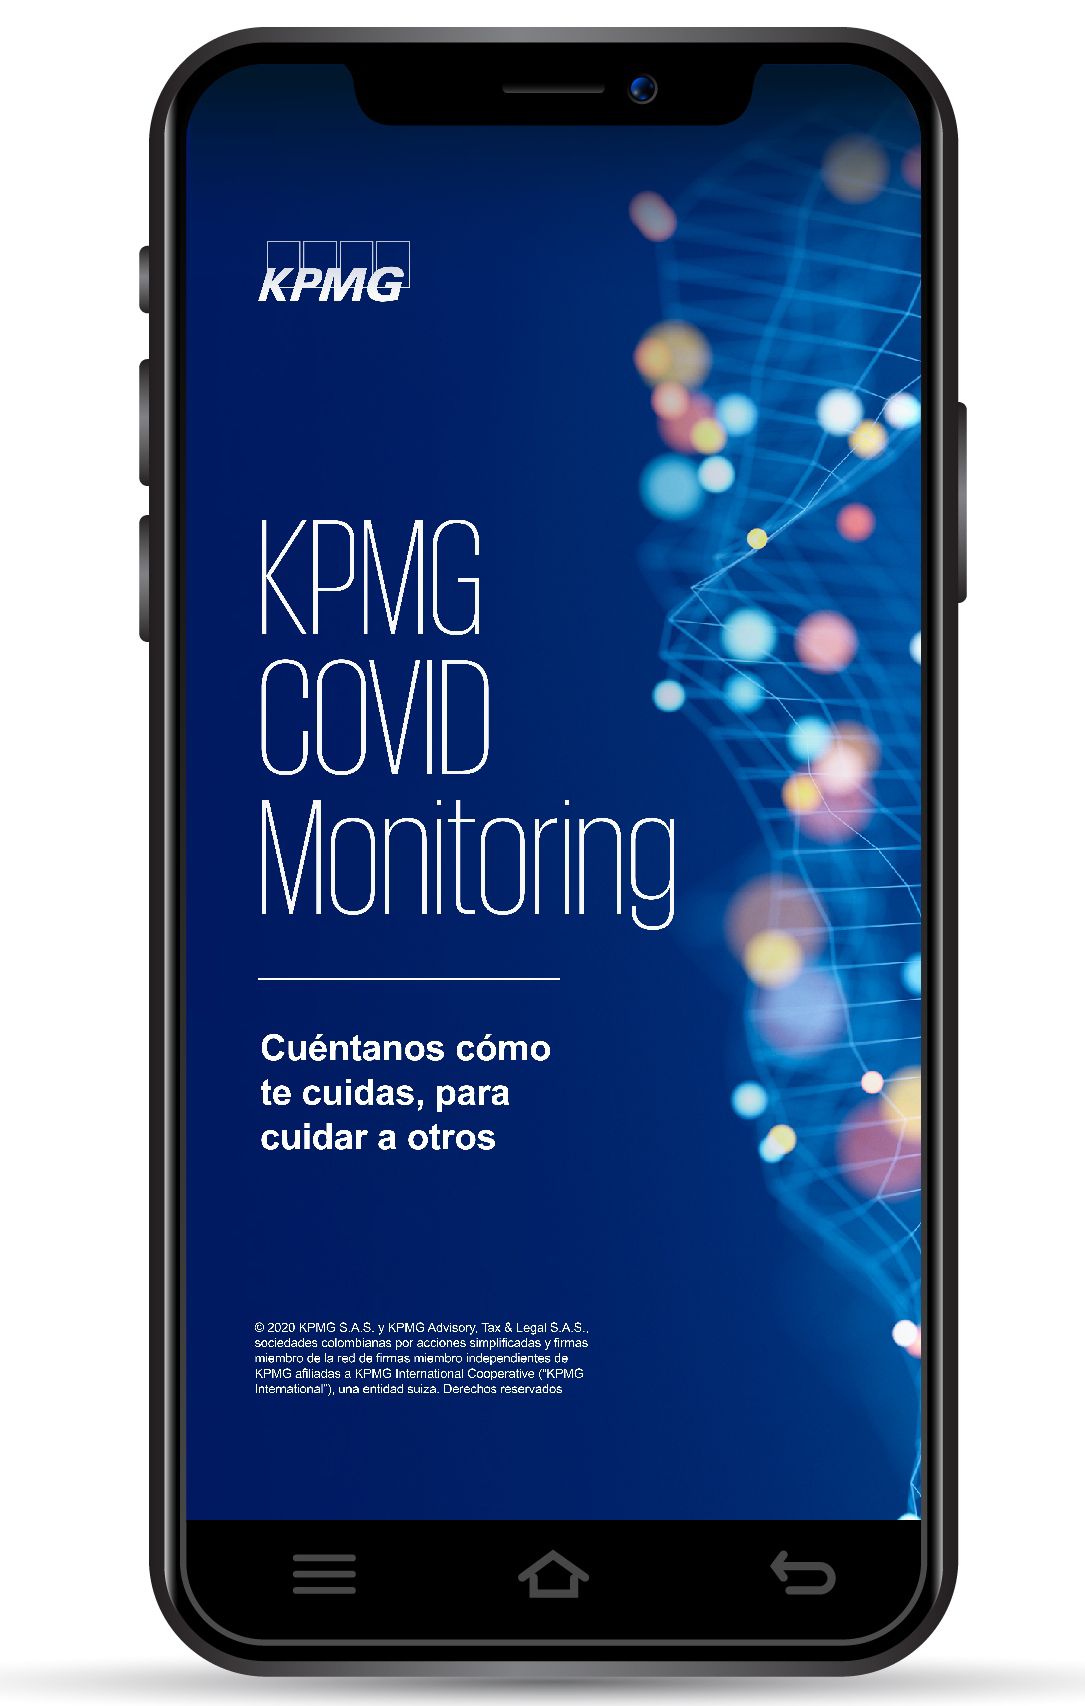 KPMG COVID Monitoring